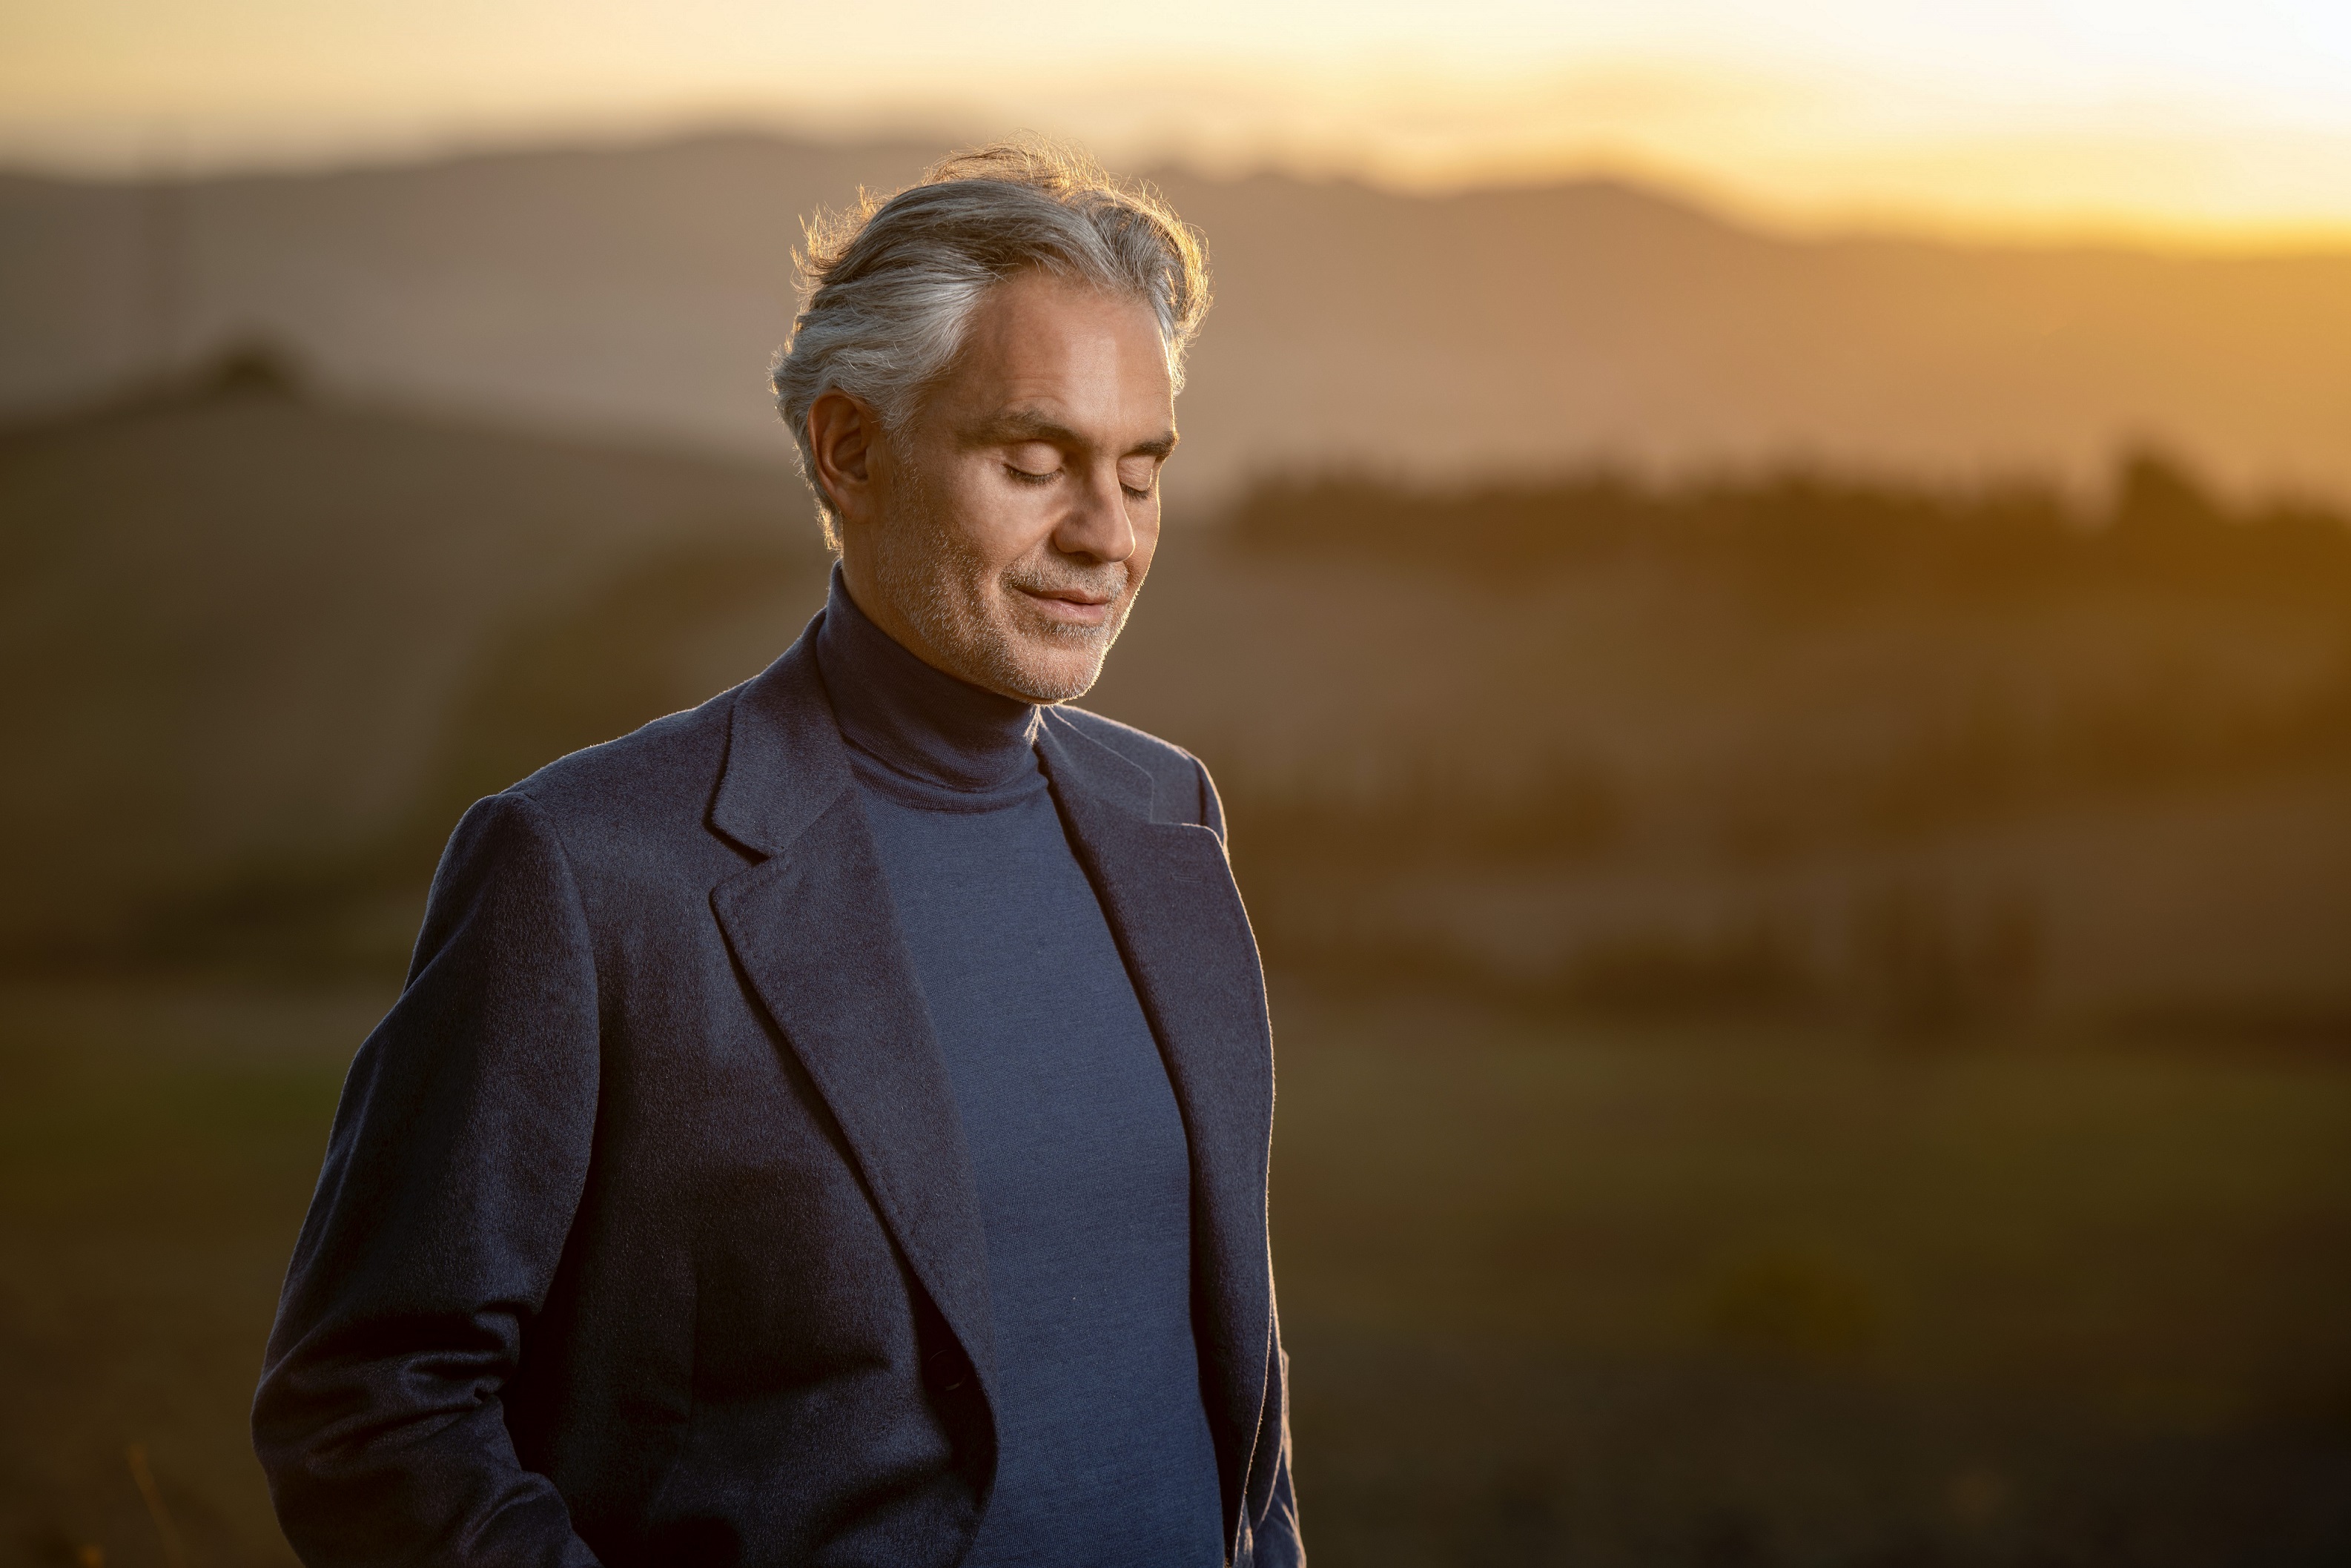 Andrea Bocelli Unveils His Brand New Album ‘Believe’ On November 13th